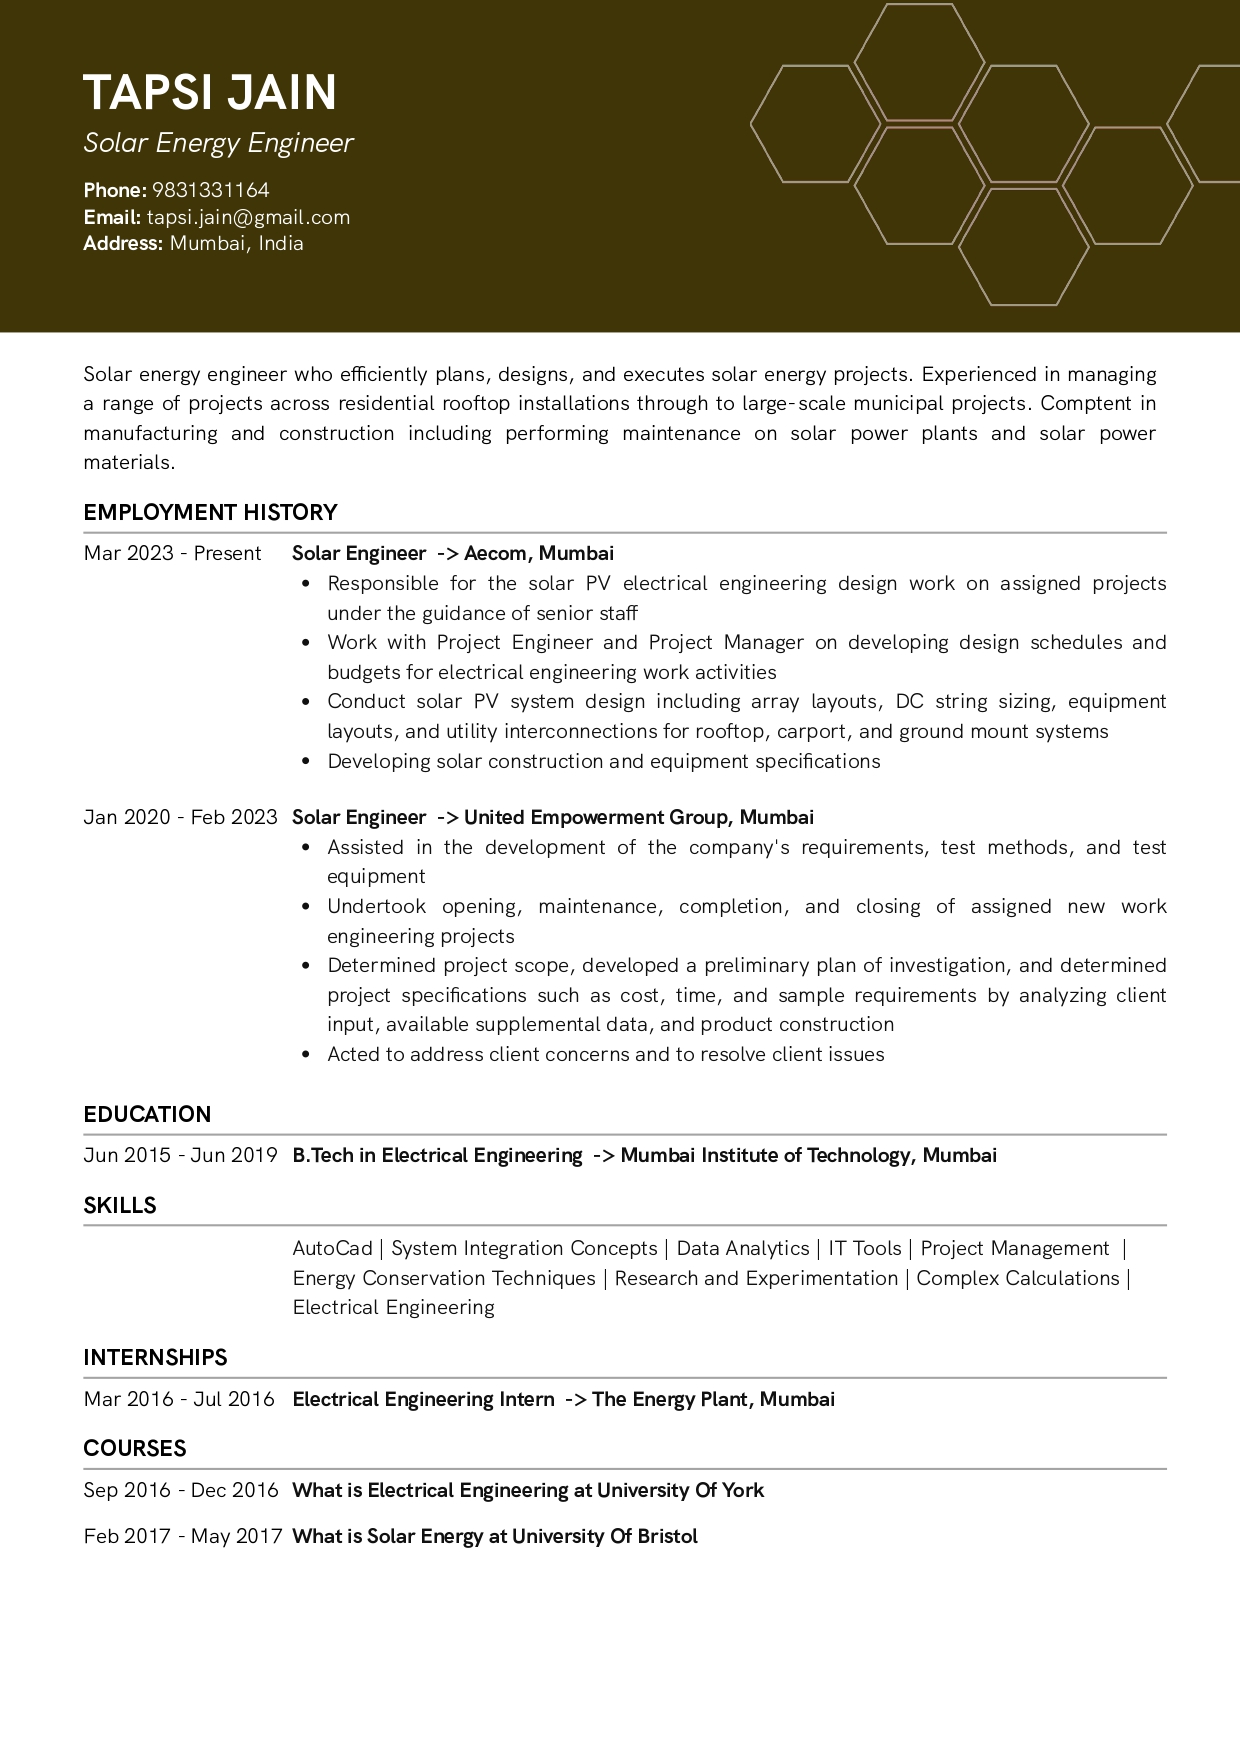 Sample Resume of Solar Energy Engineer | Free Resume Templates & Samples on Resumod.co